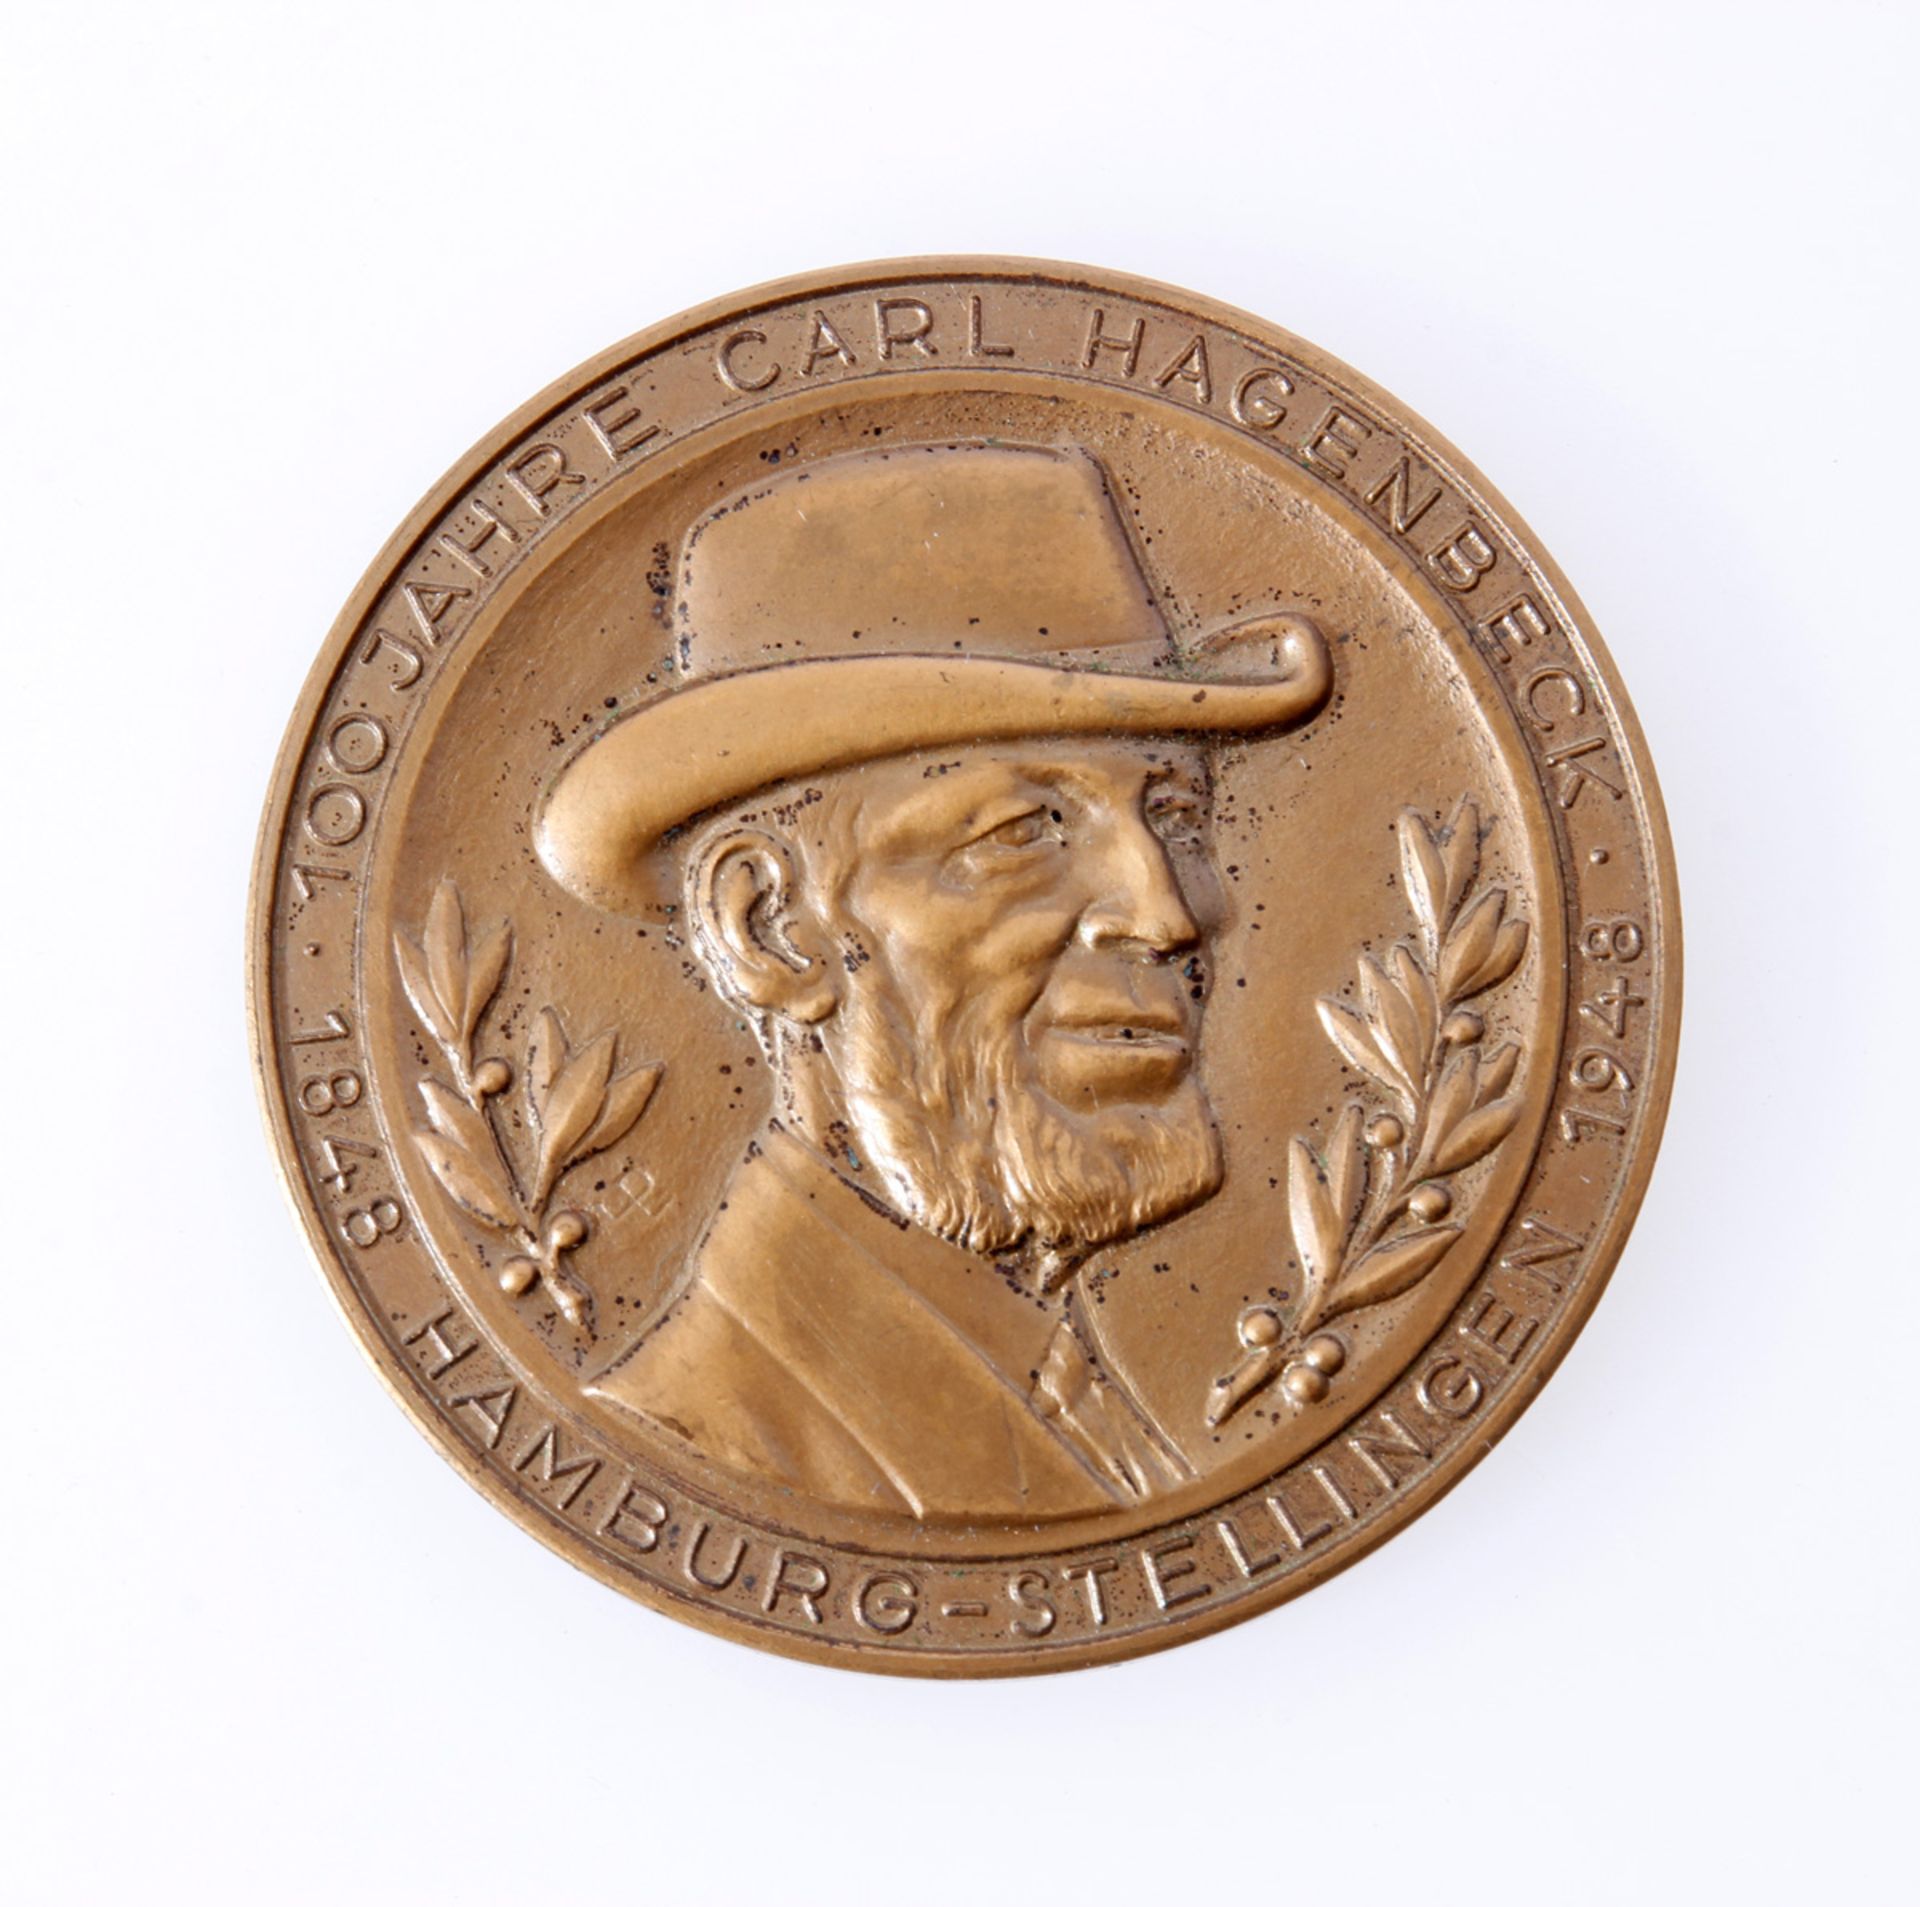 Carl Hagenbeck, commemorative medal 100 years Hagenbeck in Hamburg Stellingen, 1848-1948